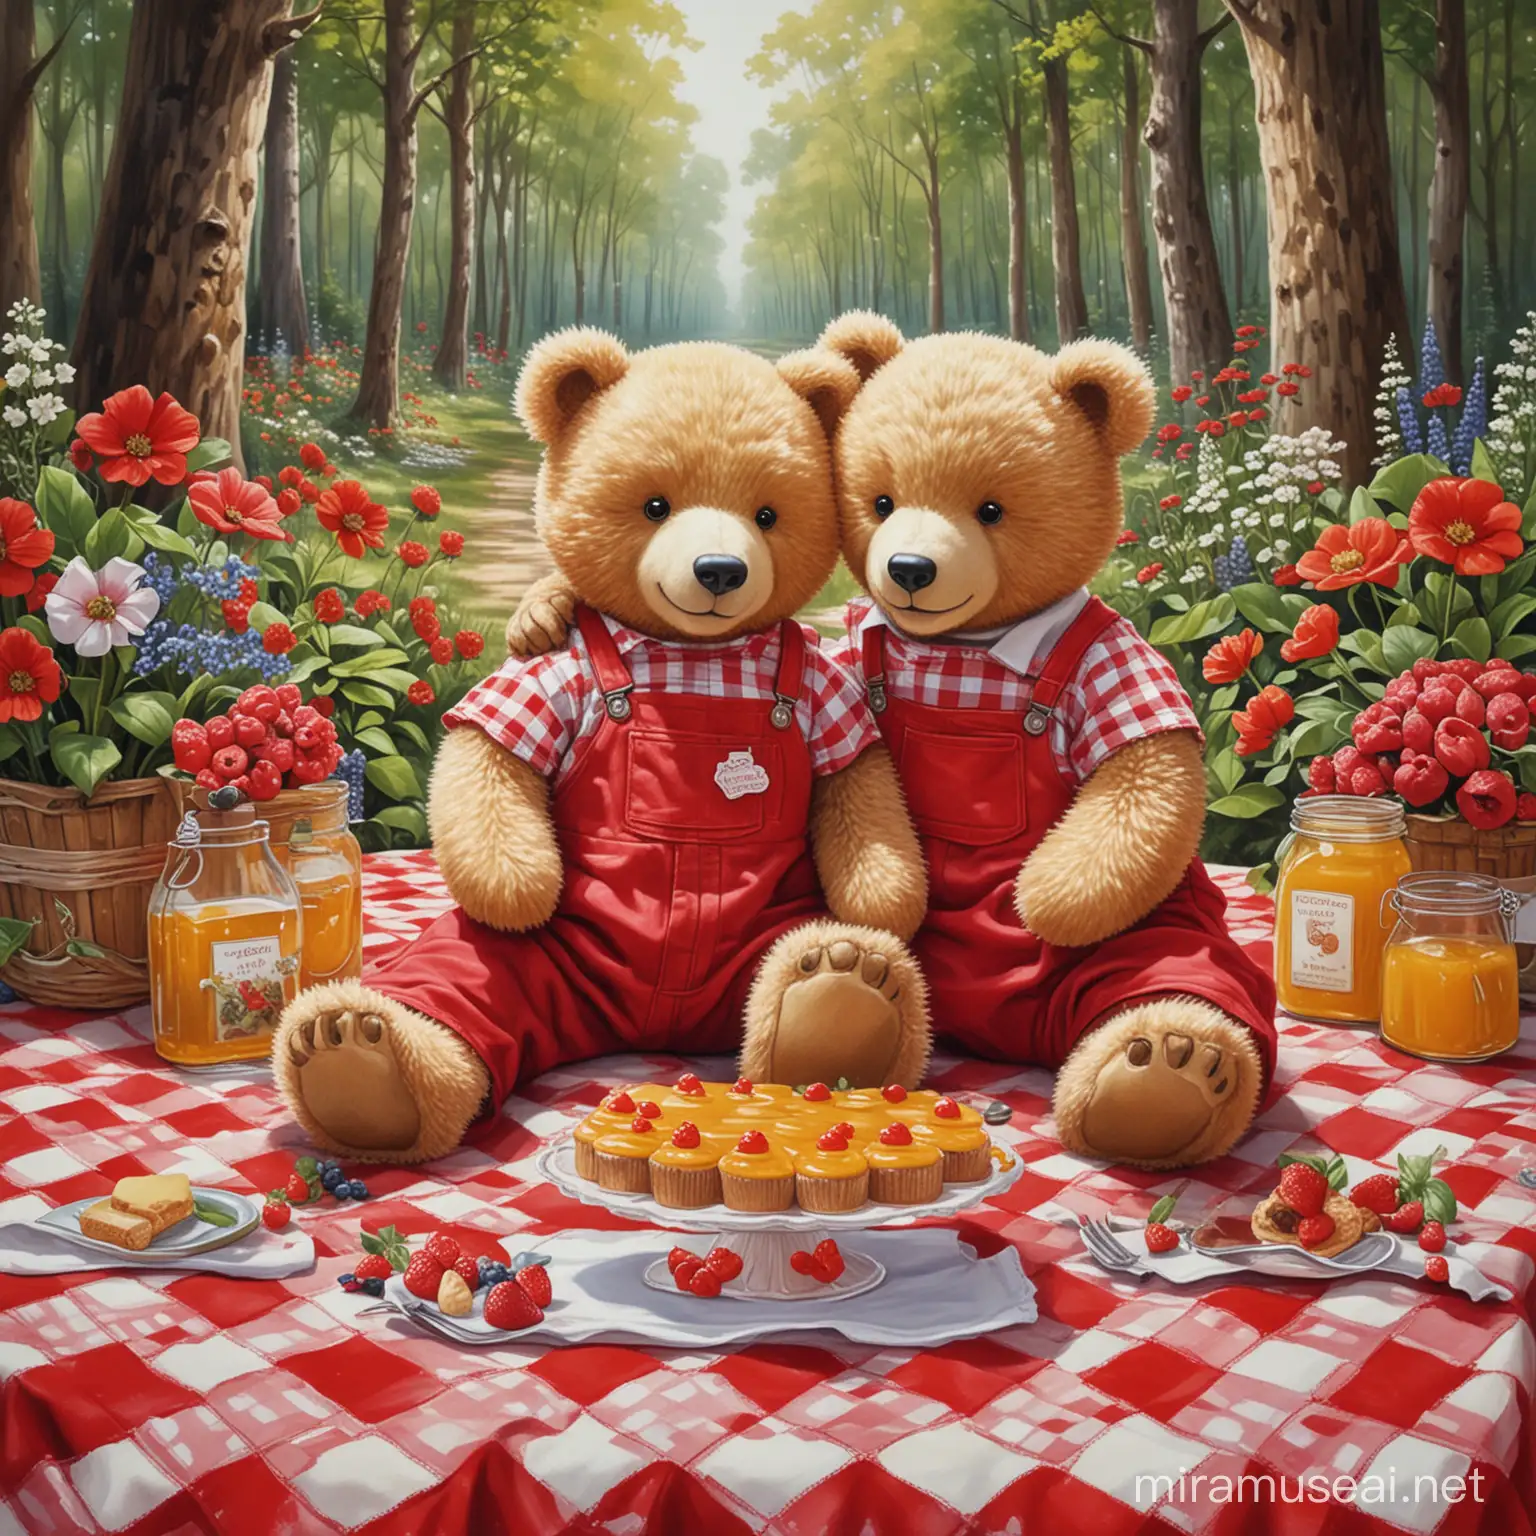 Teddy Bears Picnic Cute Bears Enjoying a Forest Feast